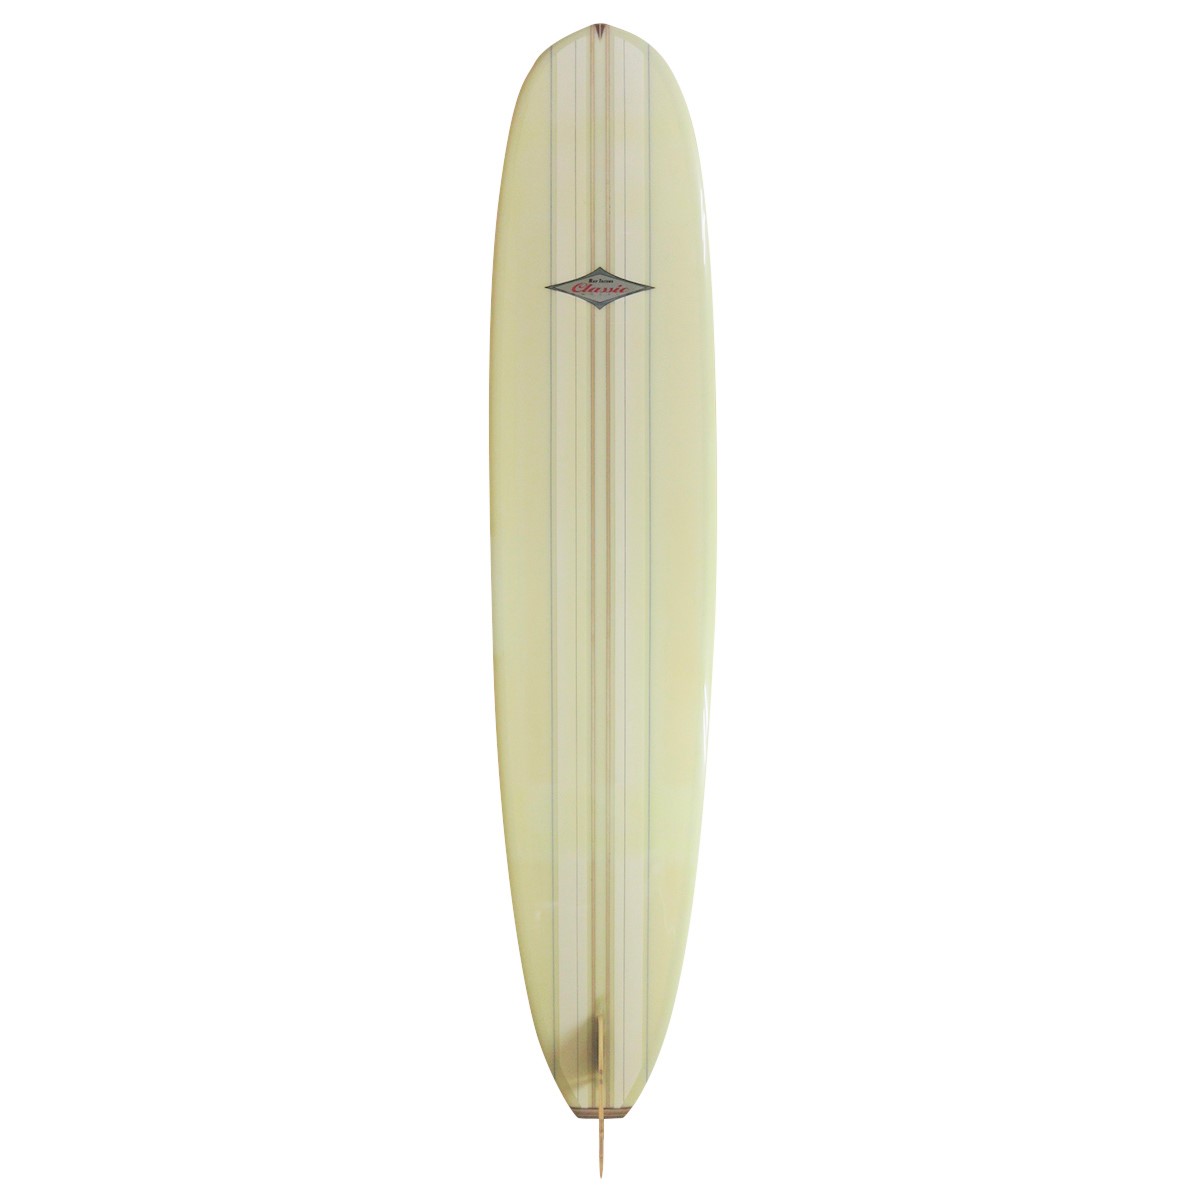 Hap Jacobs surfboards 9.8ft ロングボード程よくコンケープが入って 